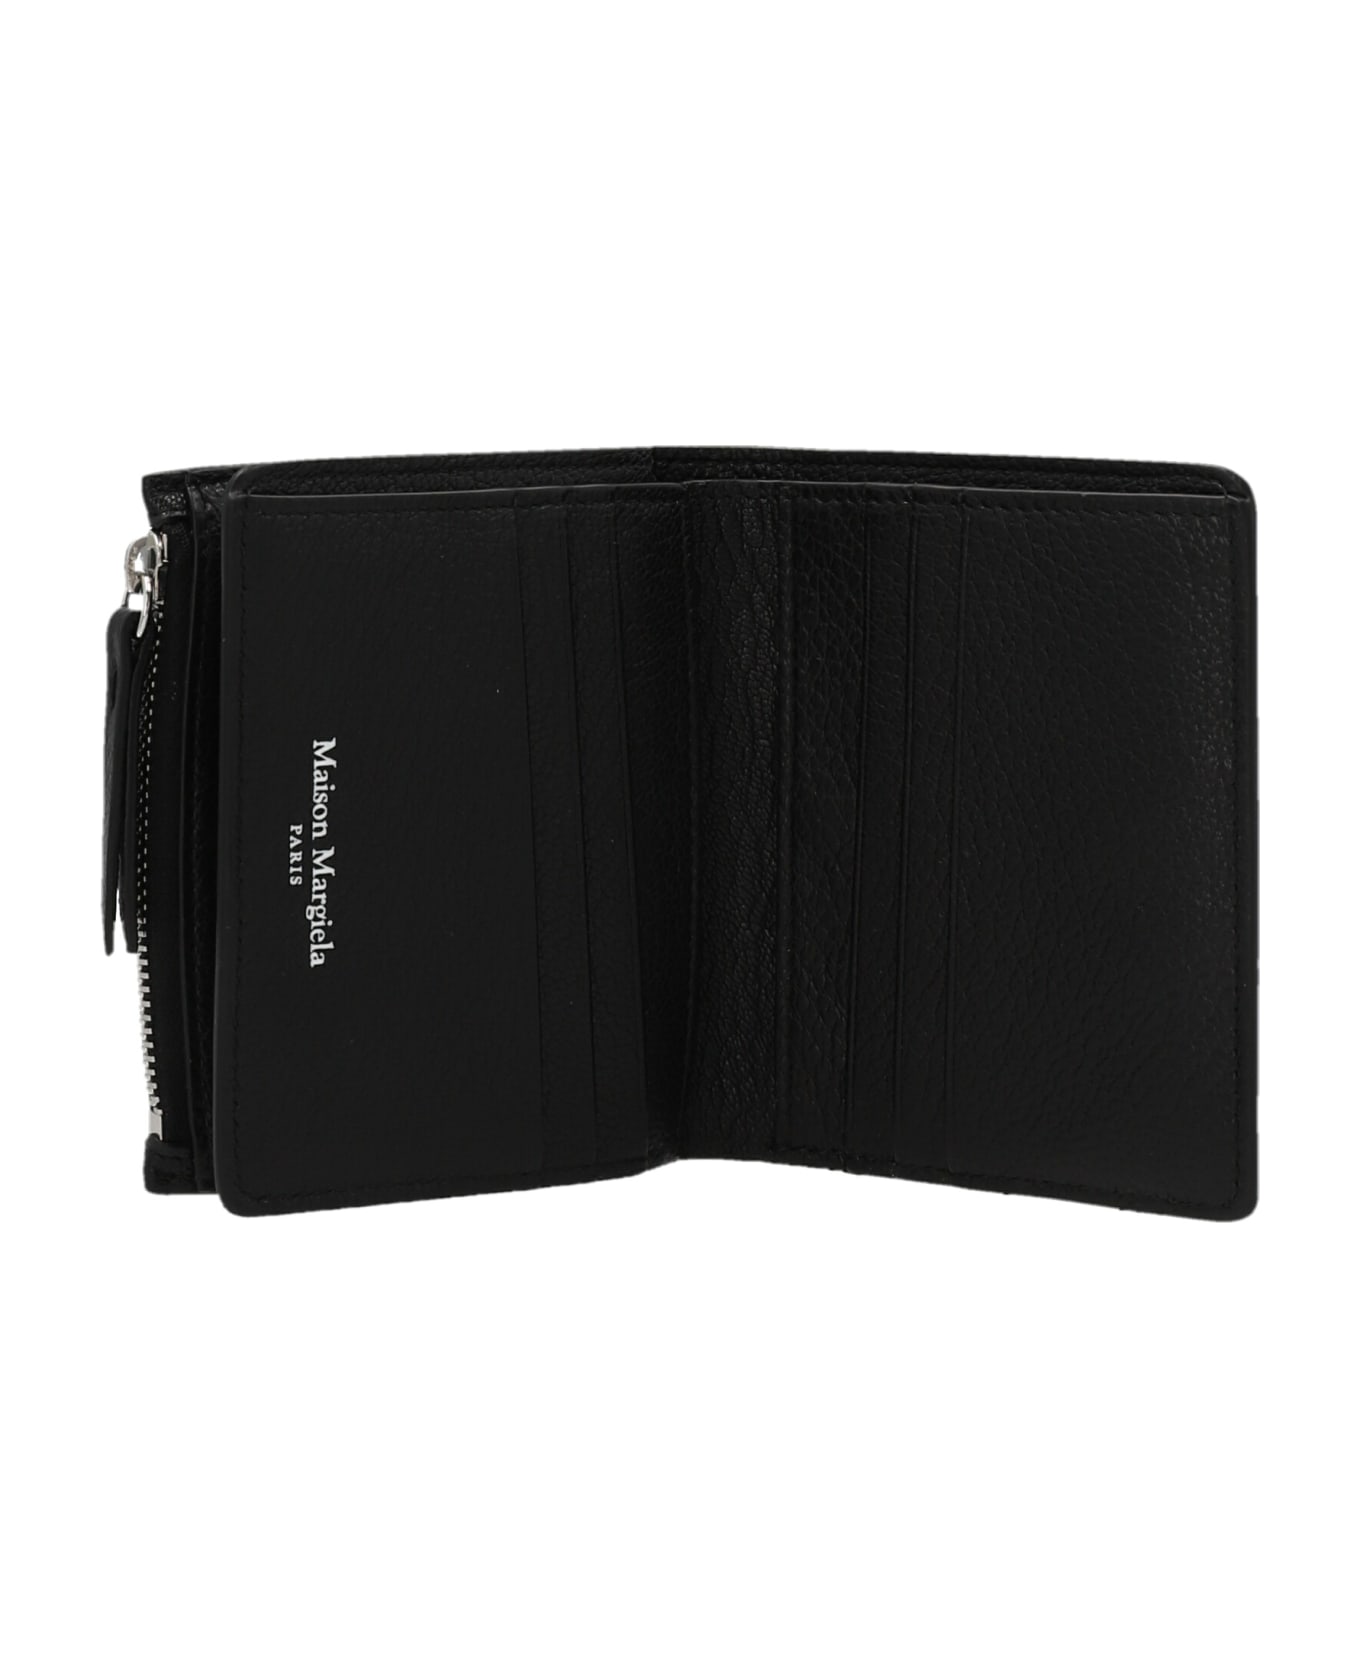 Maison Margiela Stitching Leather Wallet - Black   財布